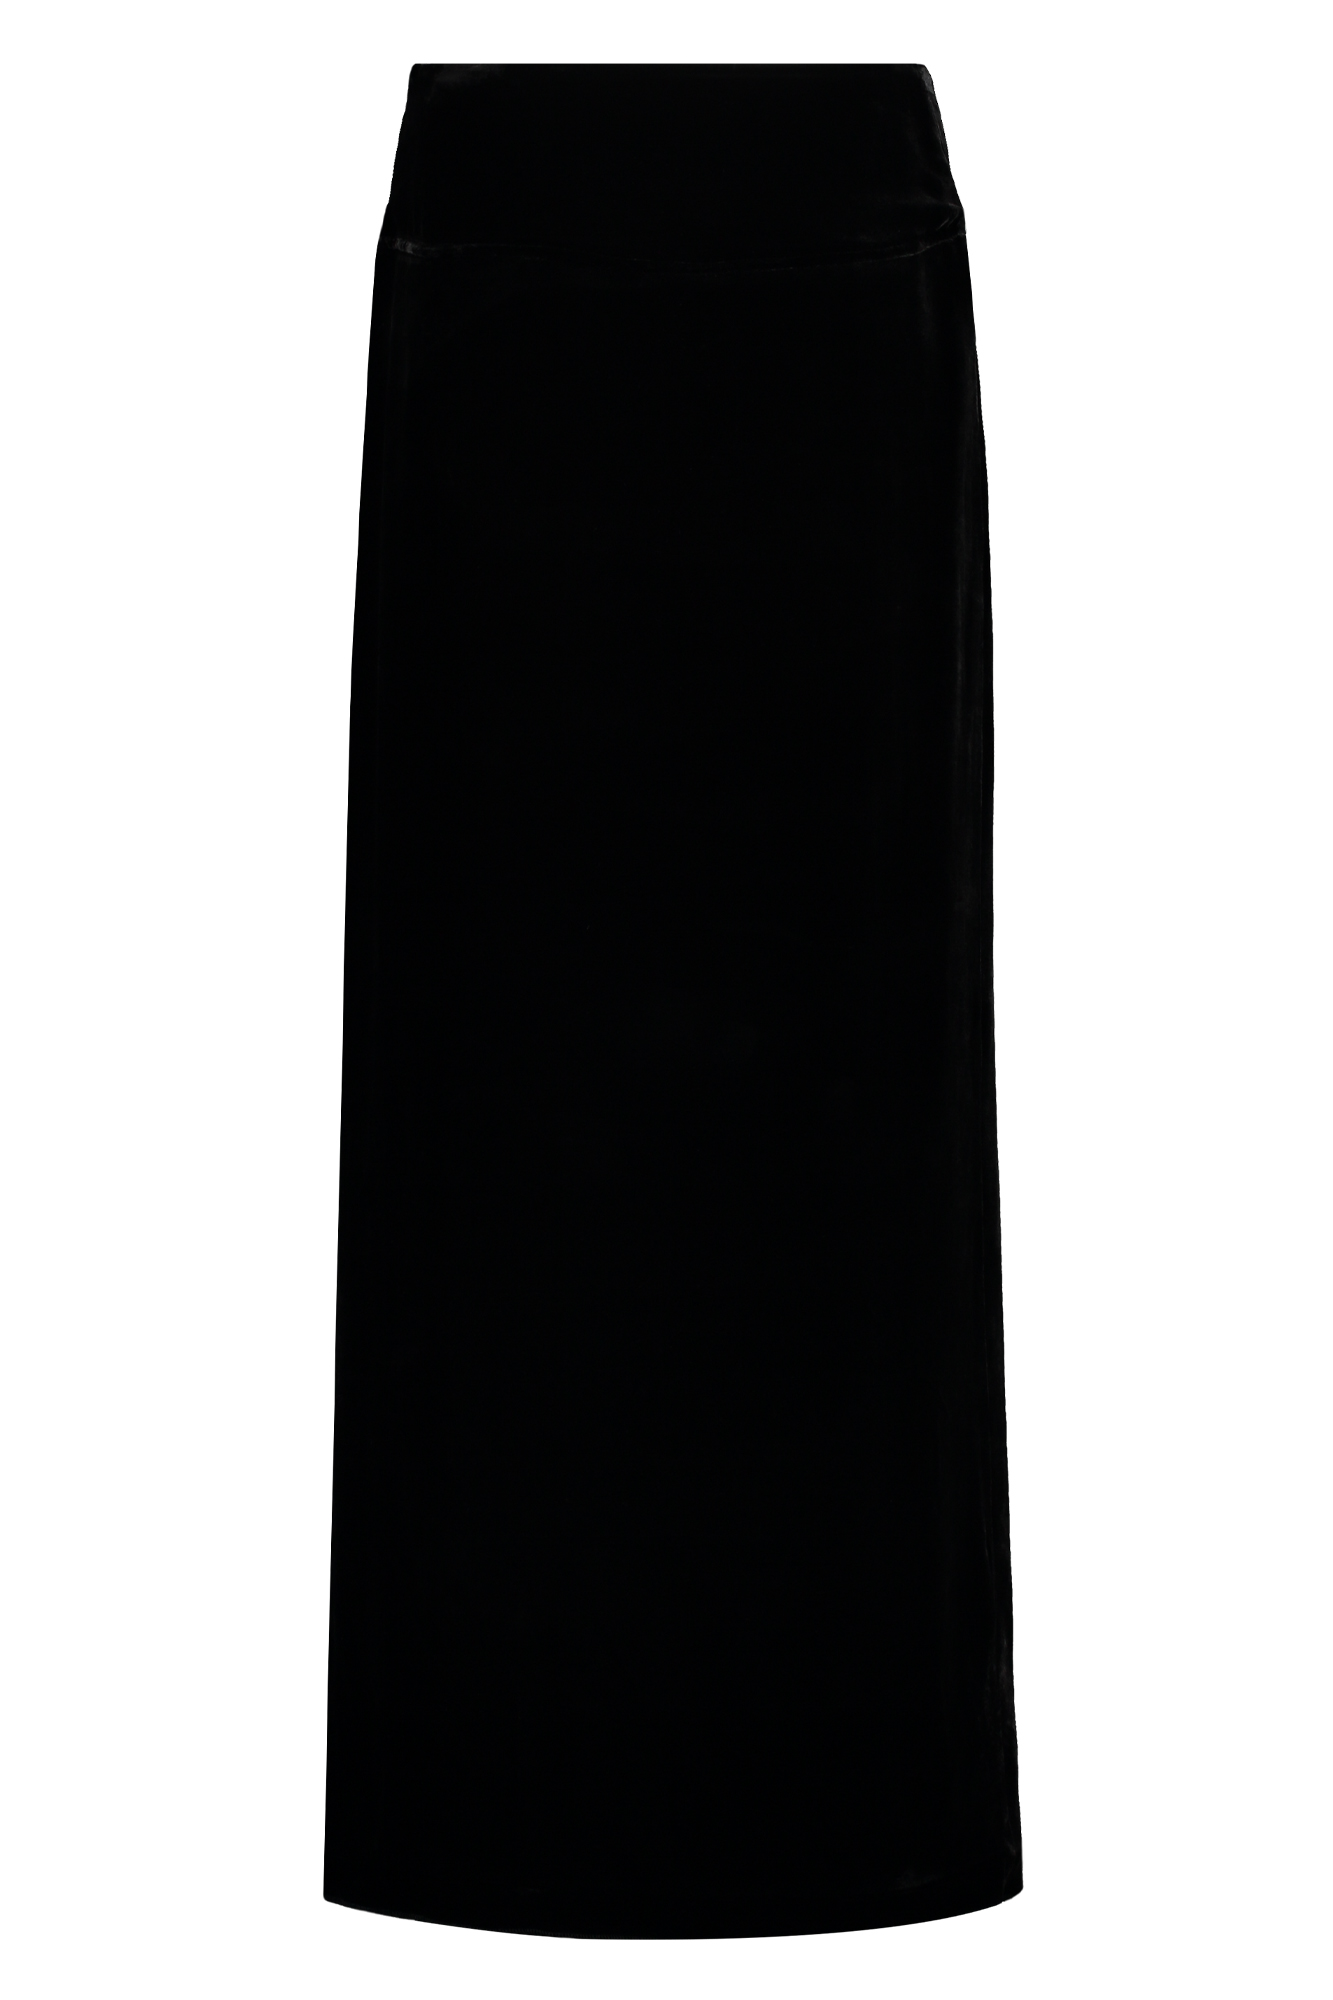 Zwarte lange rok La-X-Mi Dames rok velvet zwart